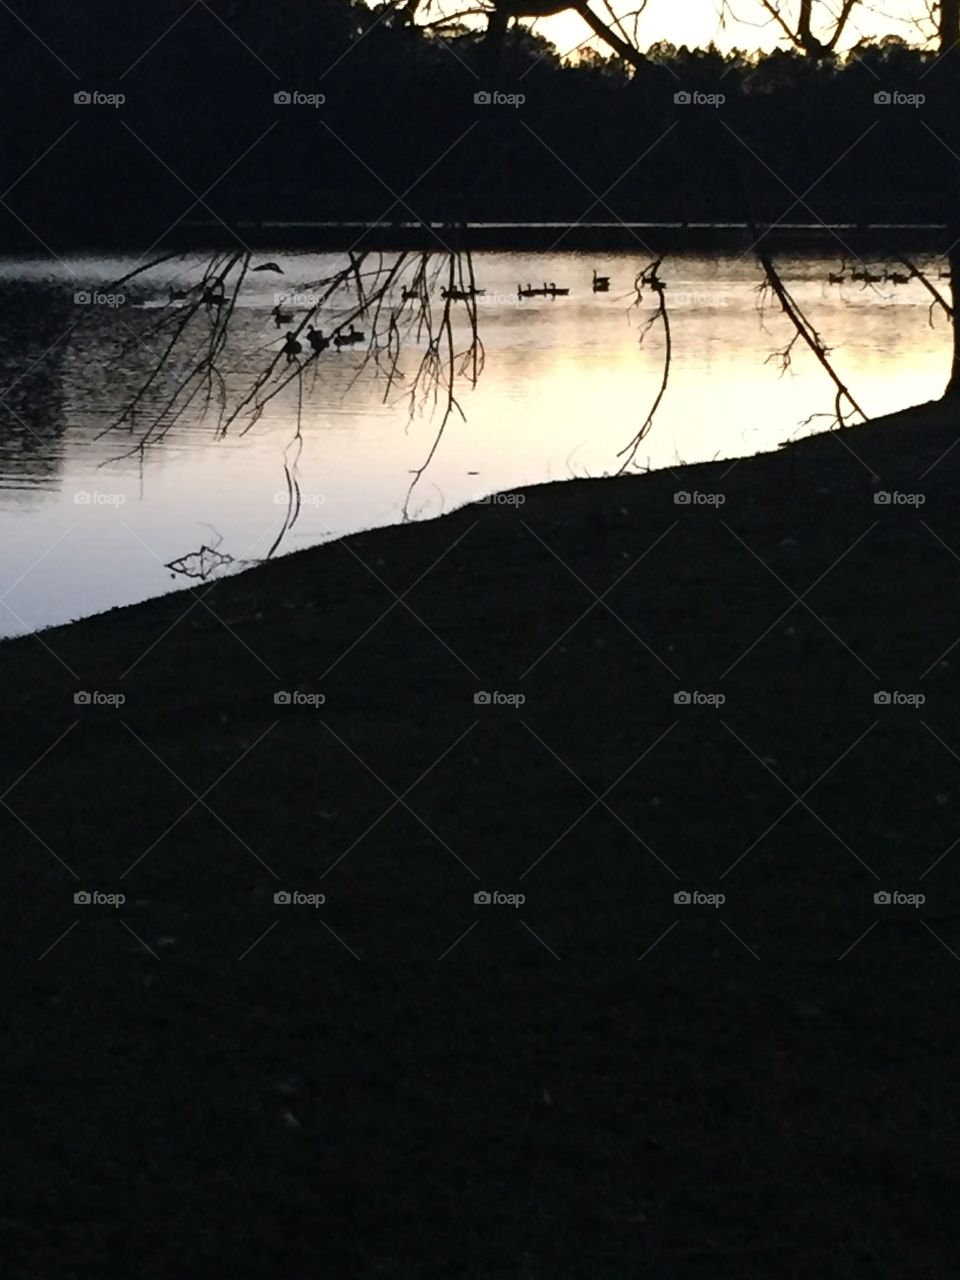 Geese at sundown